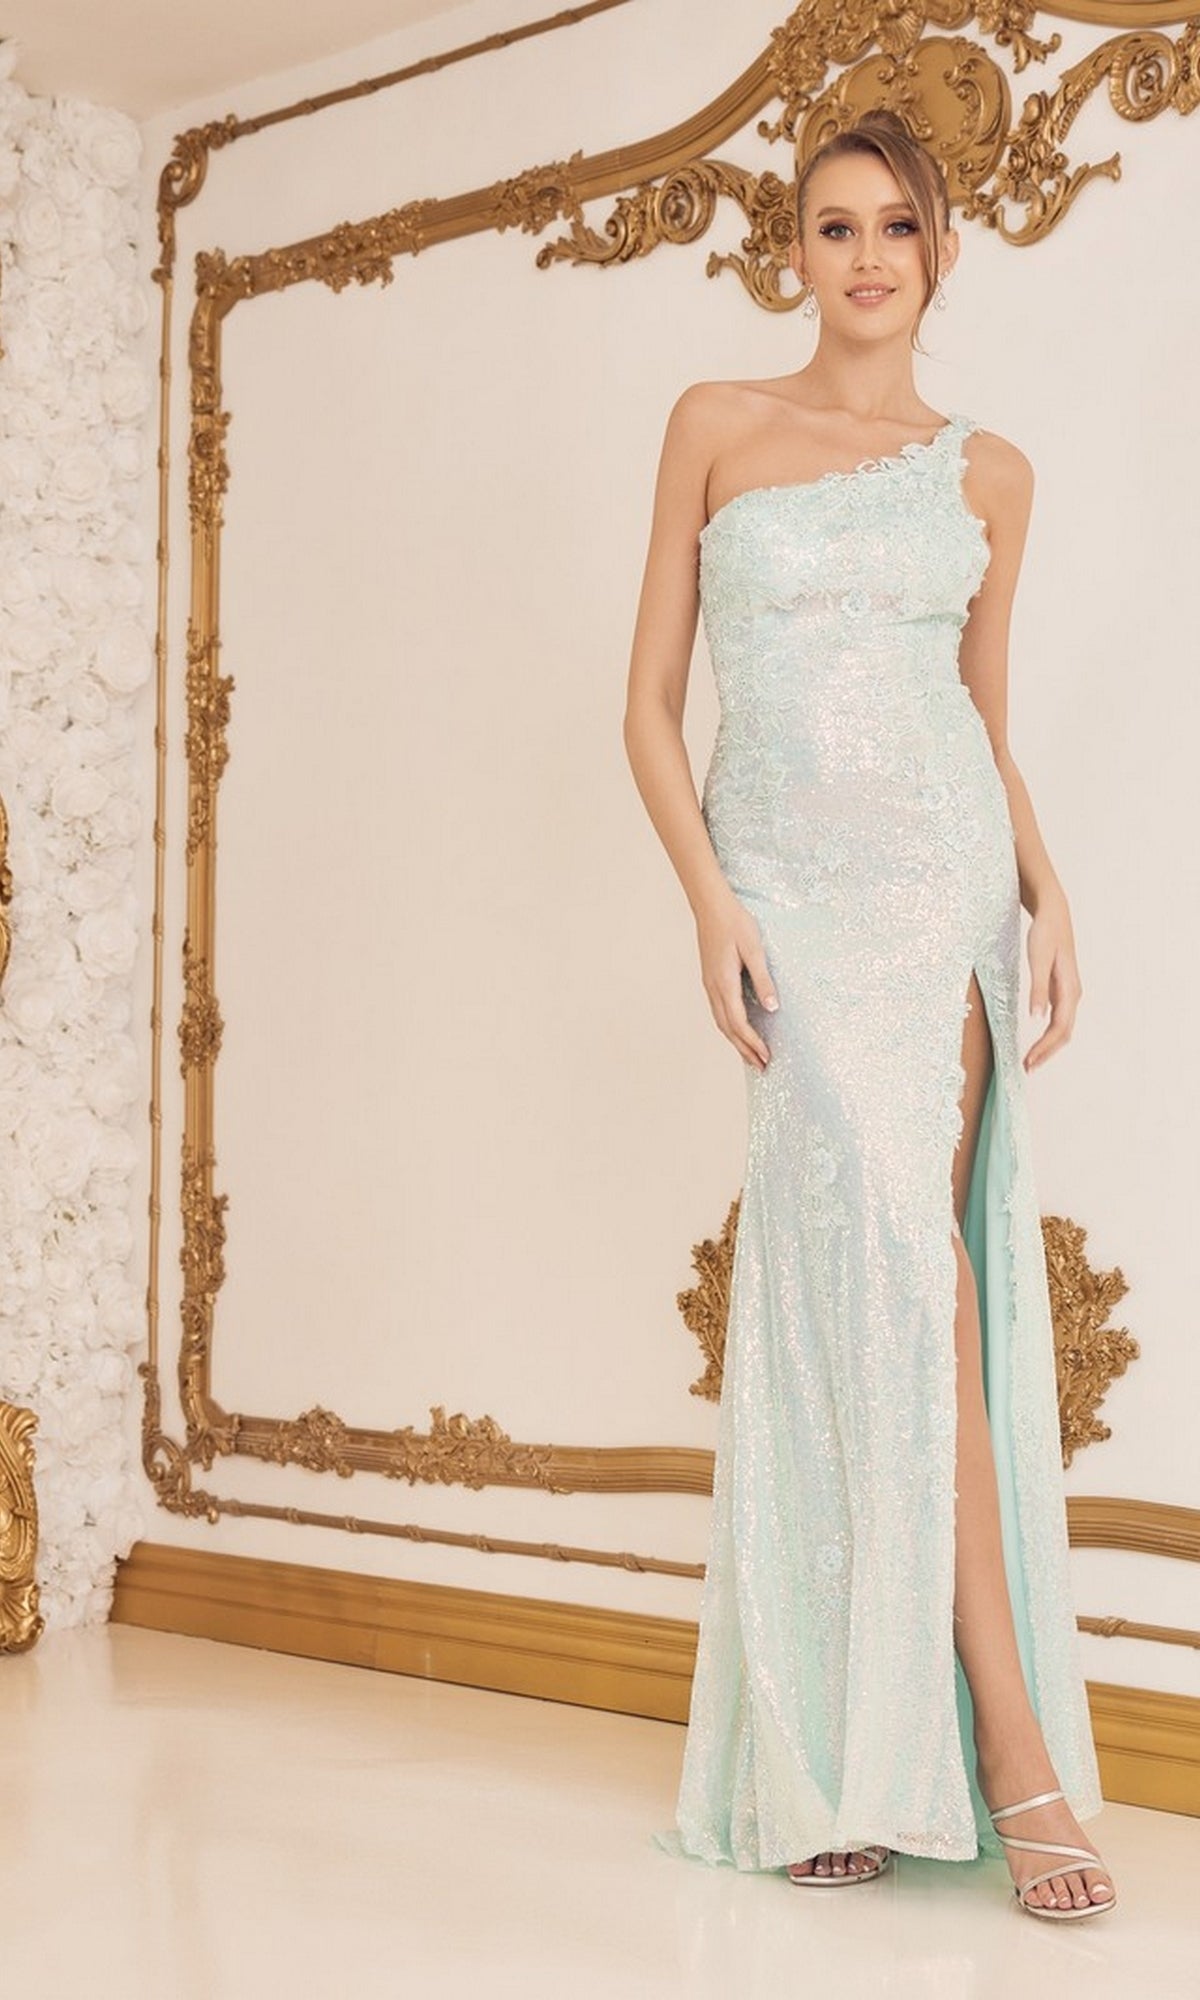  Mint Green One-Shoulder Long Lace Prom Dress D1158